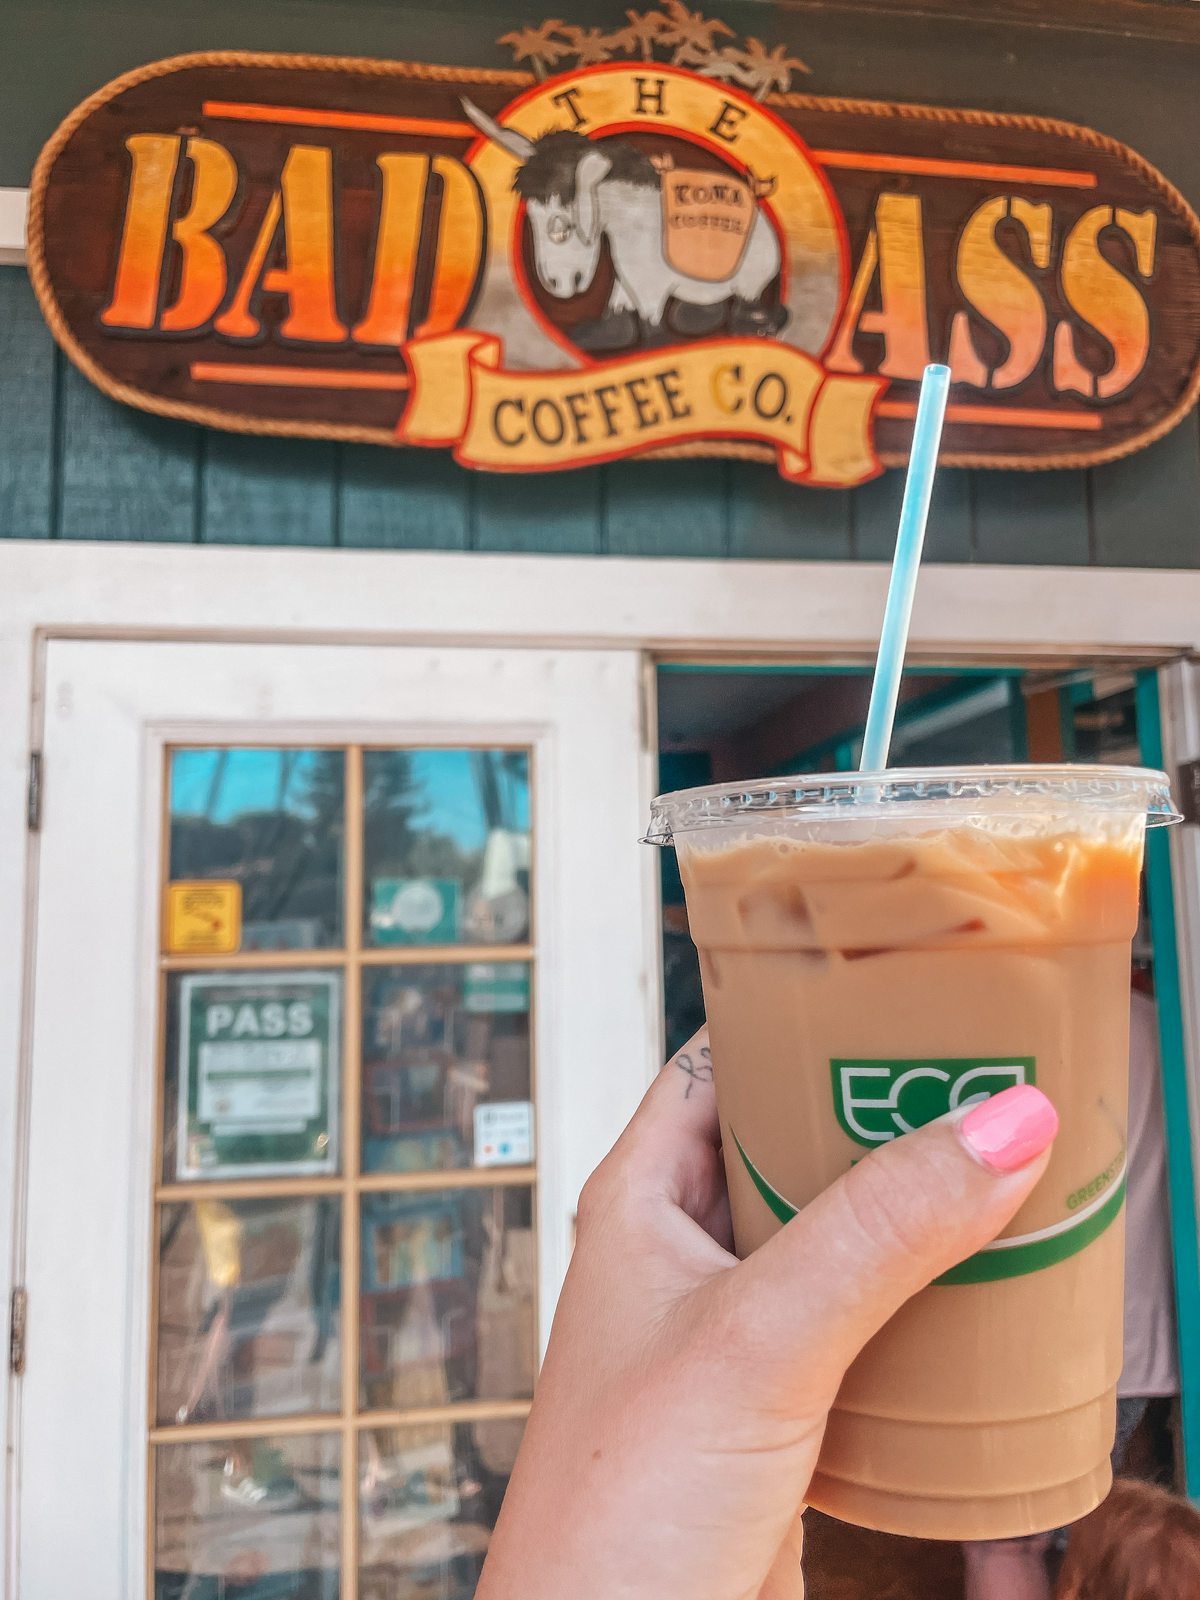 Badass Coffee iced latte Maui